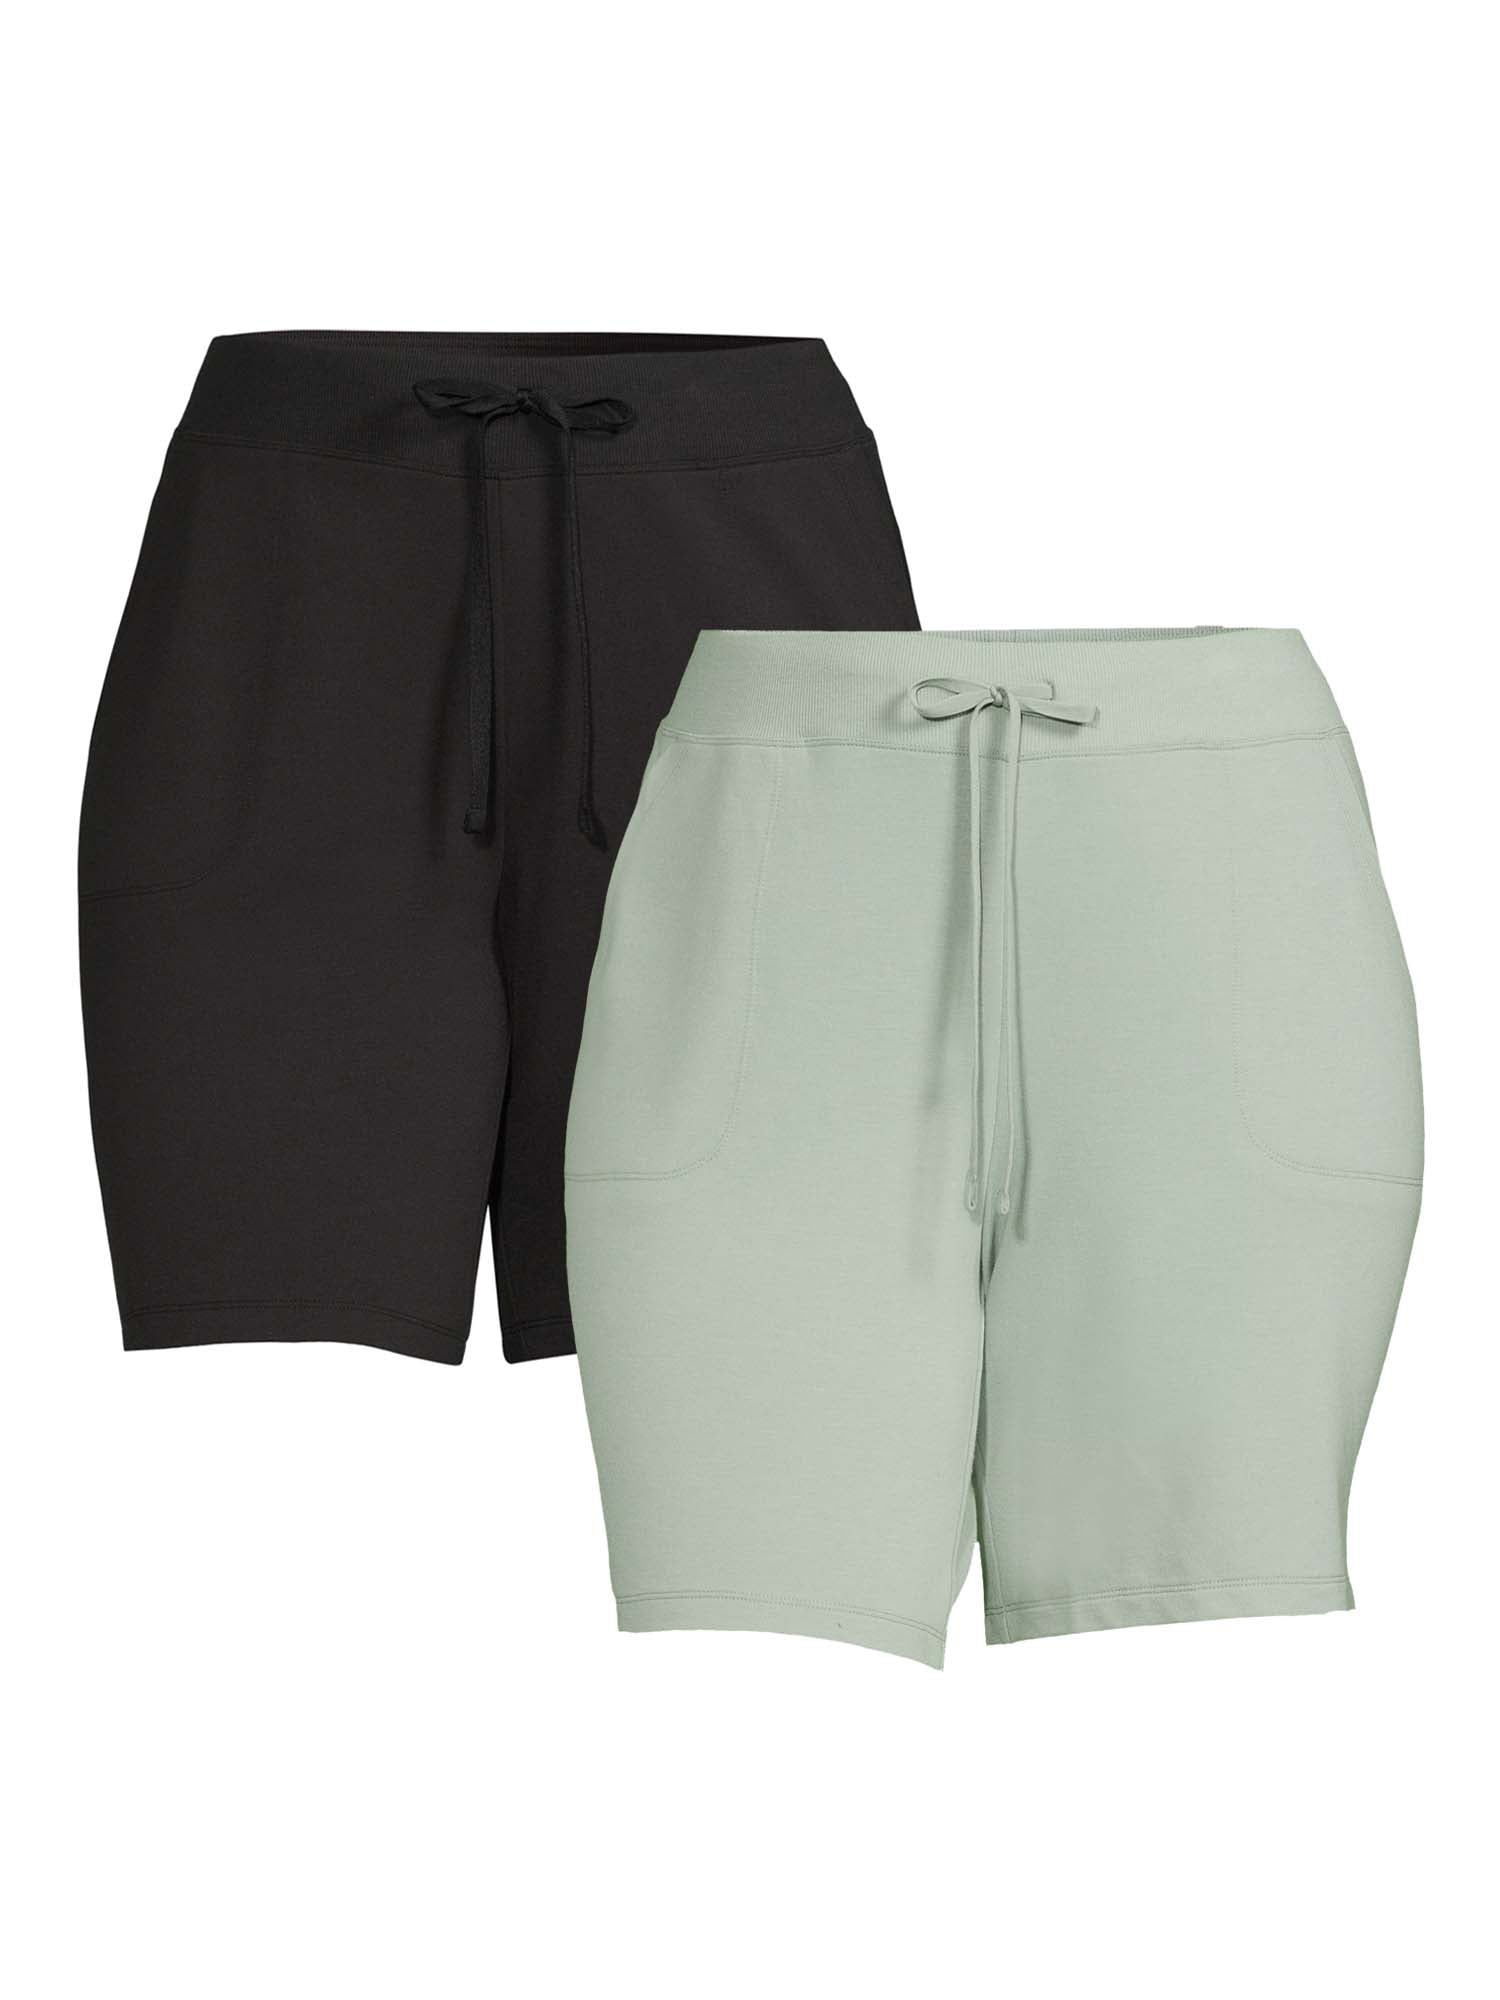 Athletic Works Women's Plus Size Bermuda Shorts, 2-Pack - Walmart.com